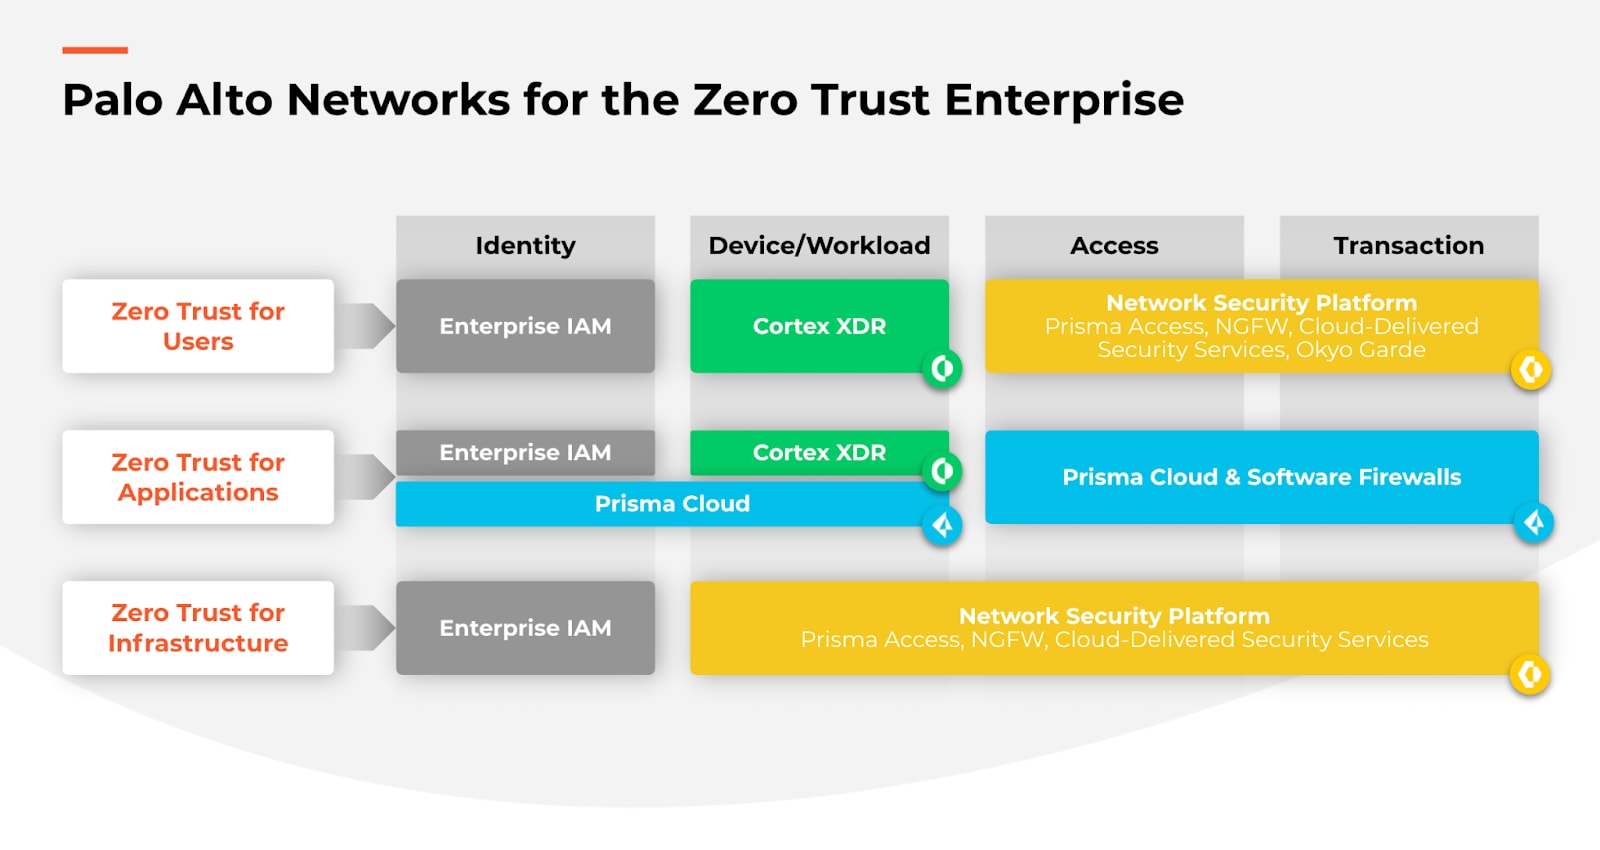 Palo Alto Networks provides a portfolio approach to enable a Zero Trust Enterprise